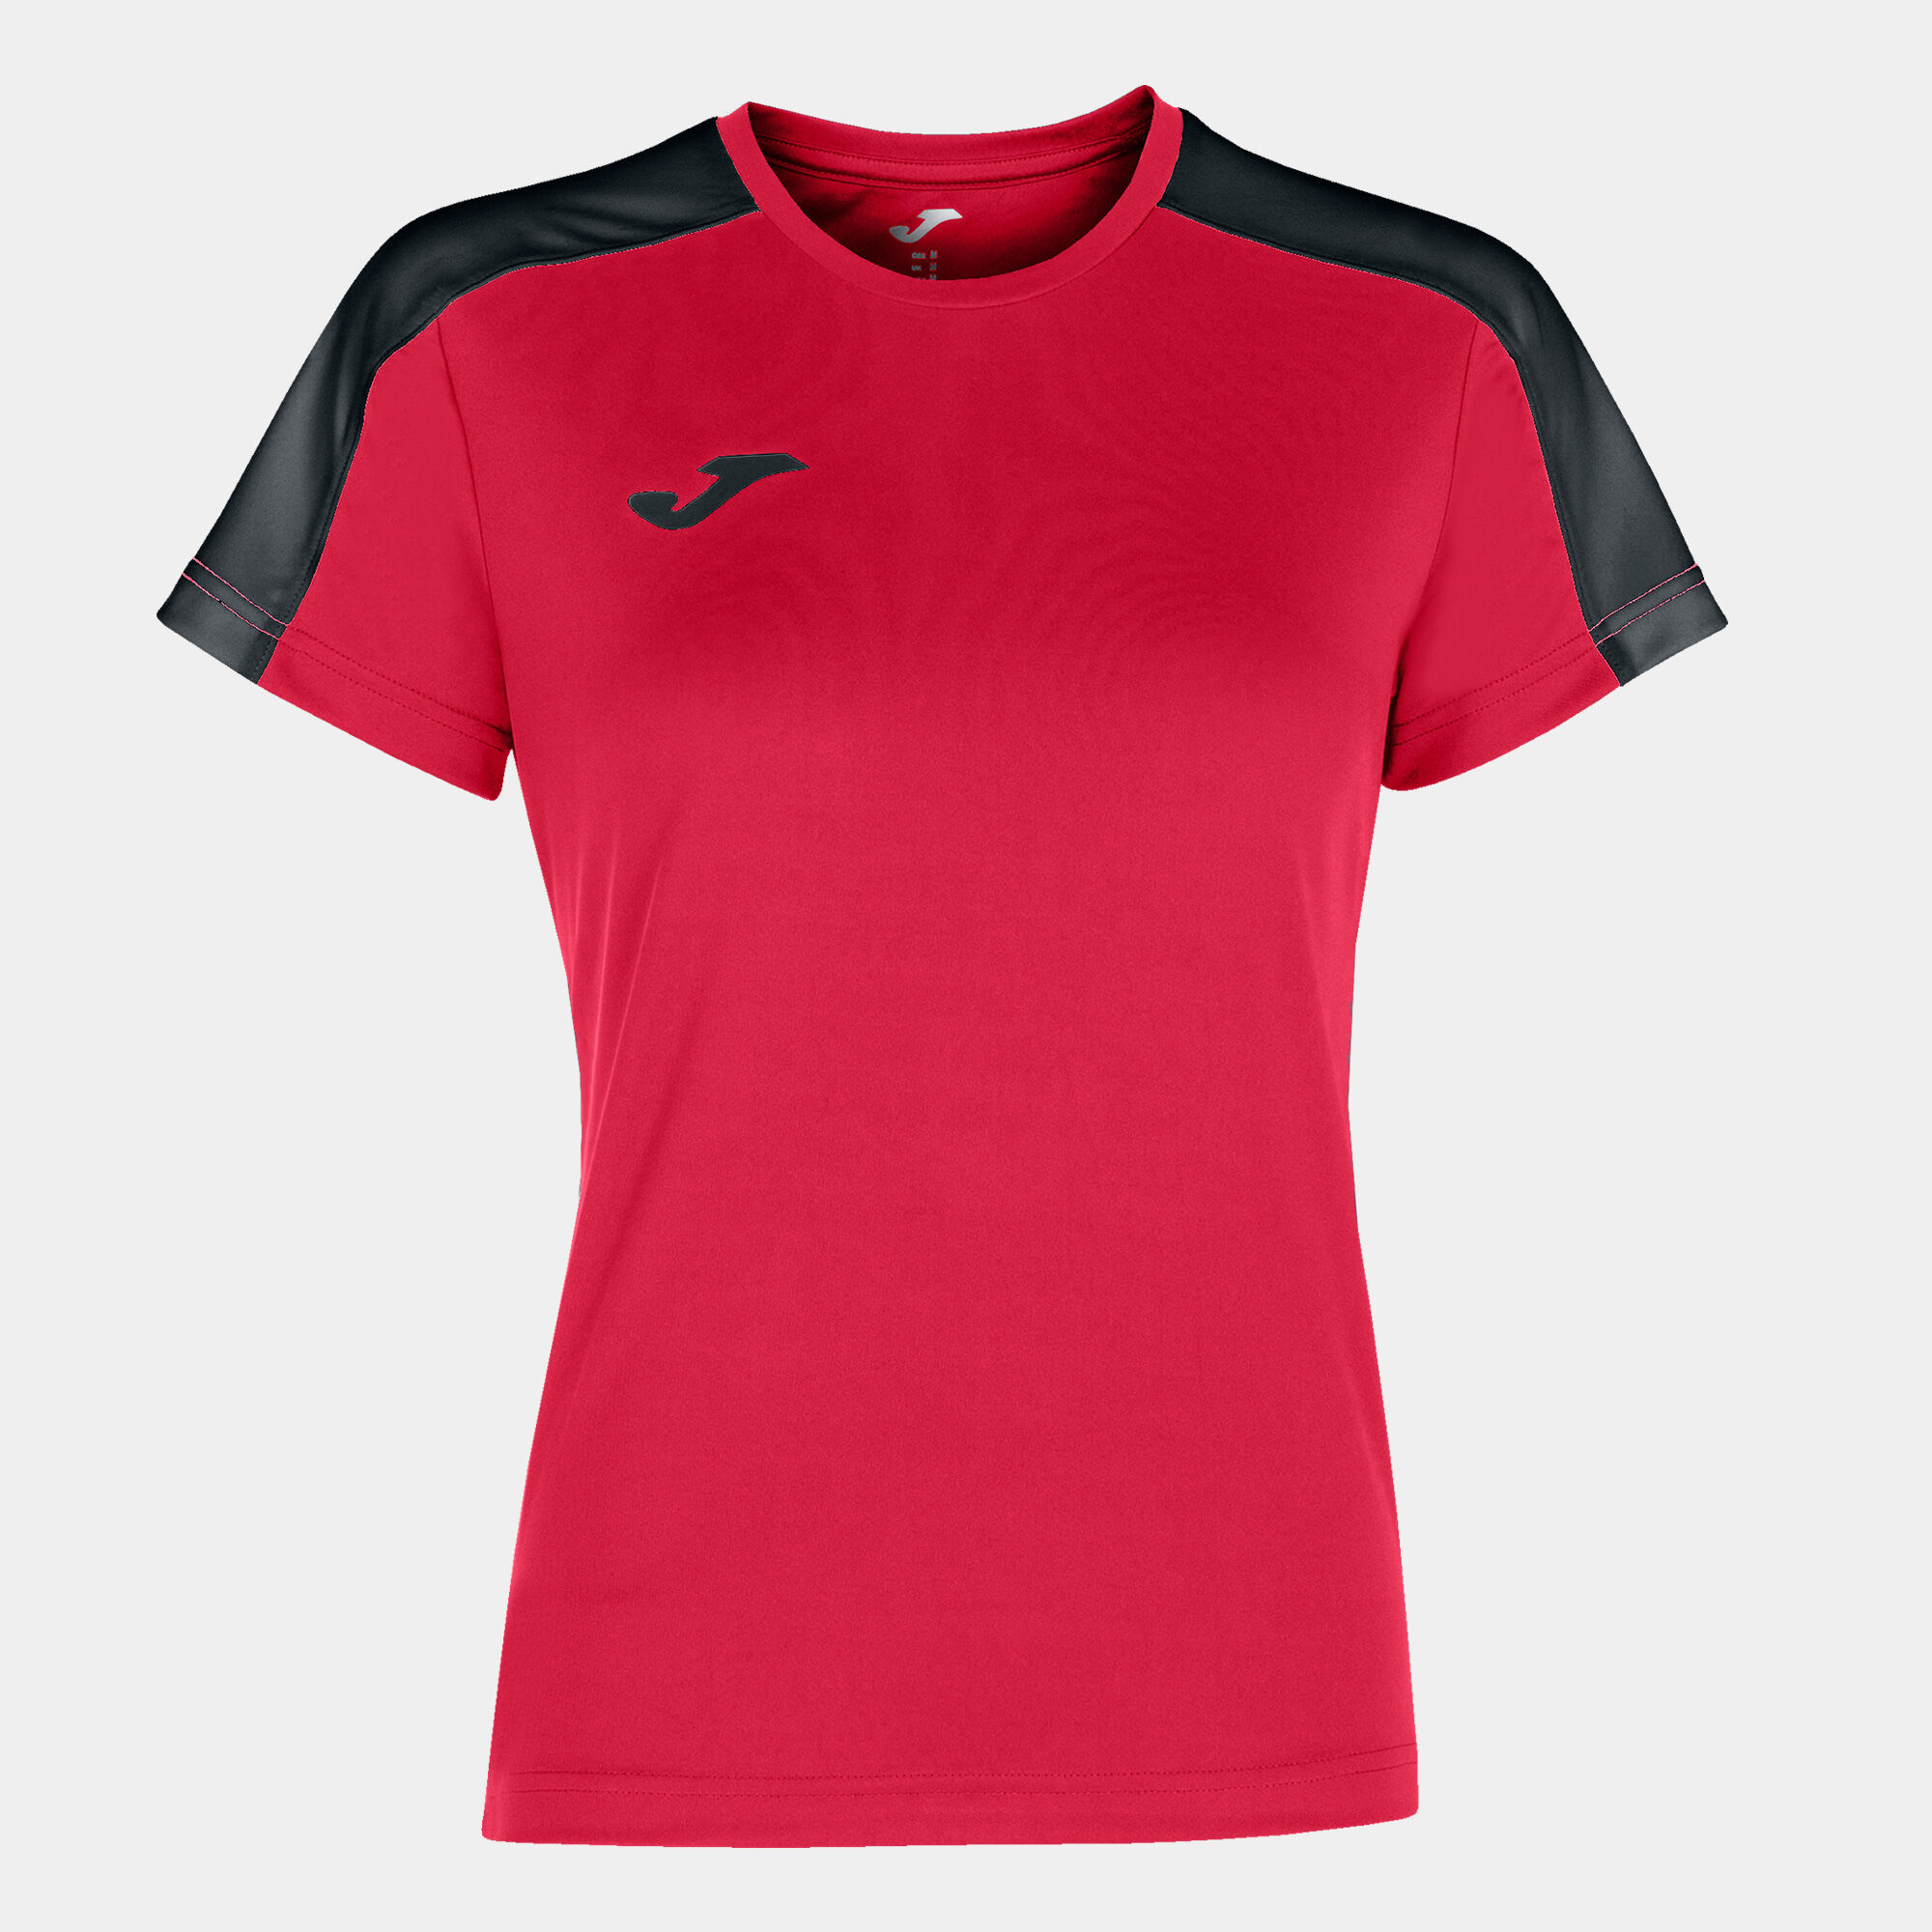 Shirt short sleeve woman Academy III red black